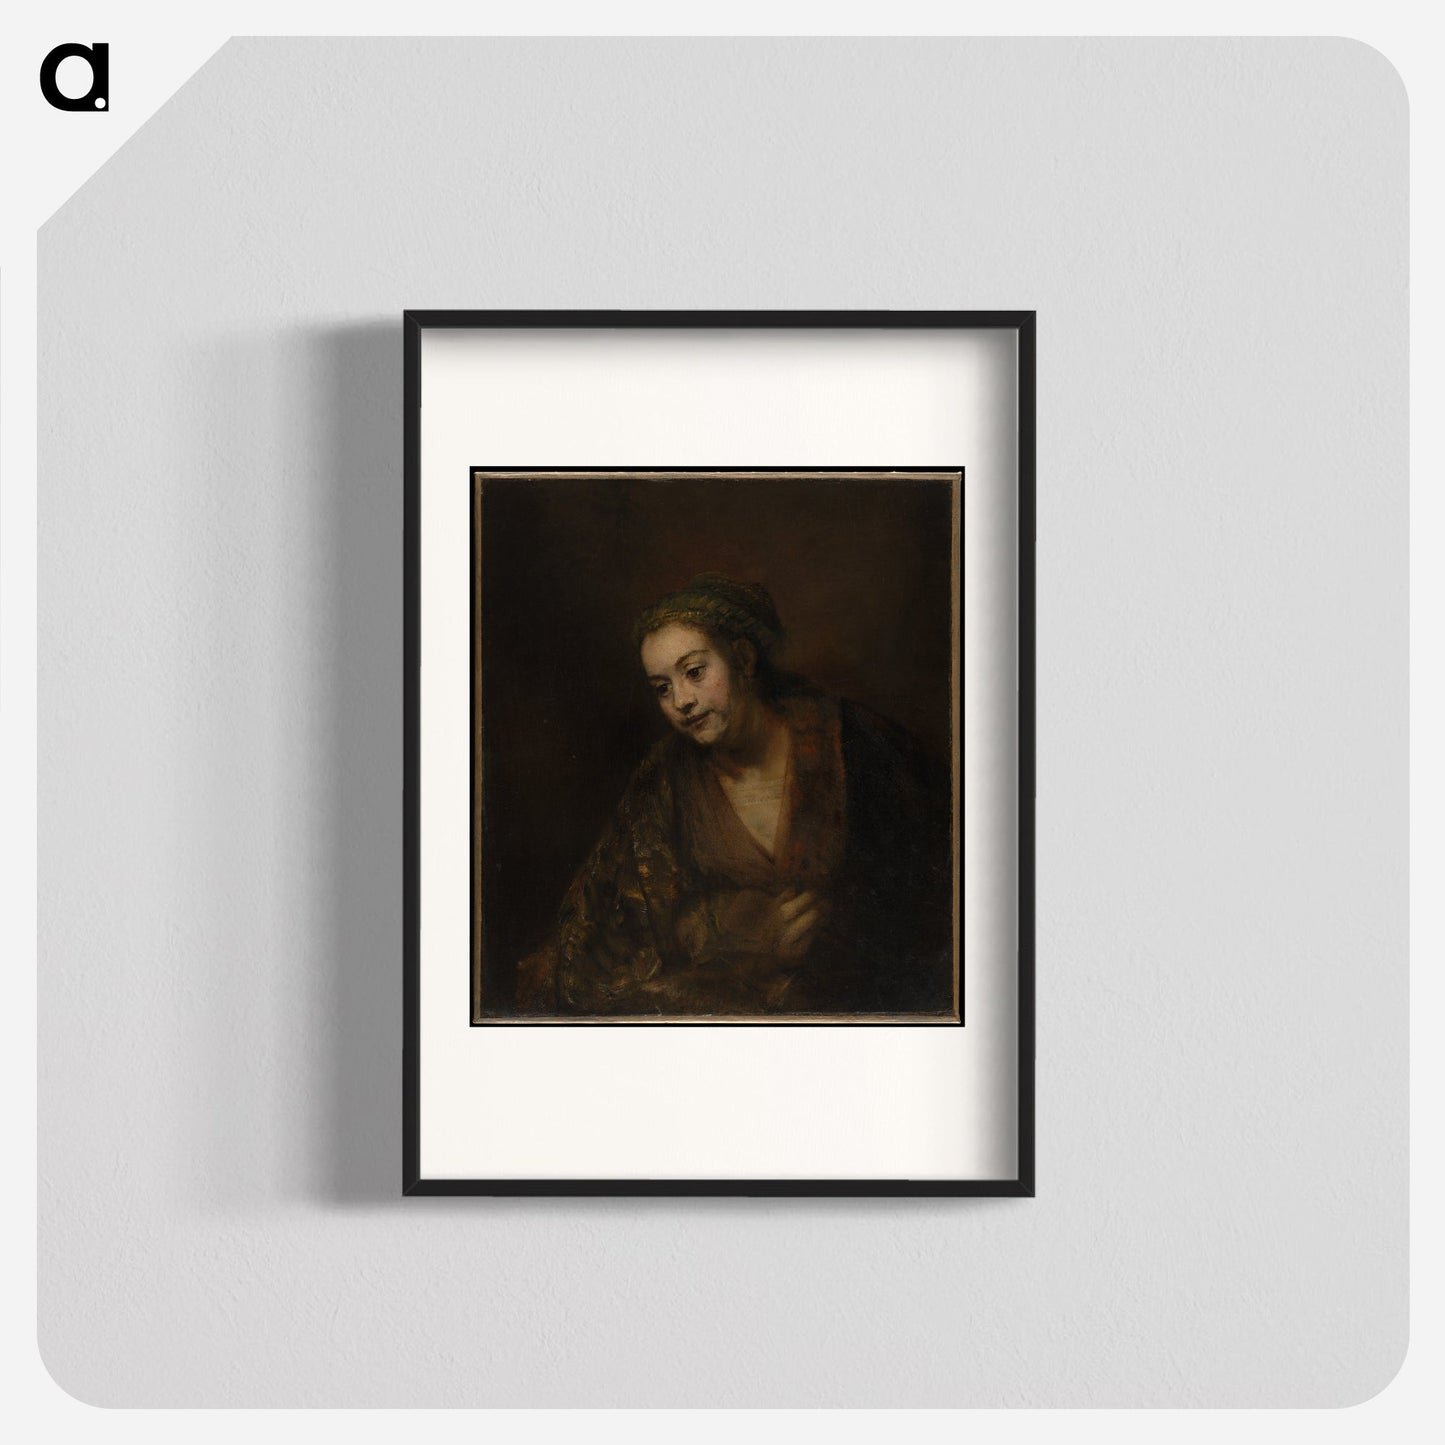 Hendrickje Stoffels by Rembrandt van Rijn Poster. - artgraph.